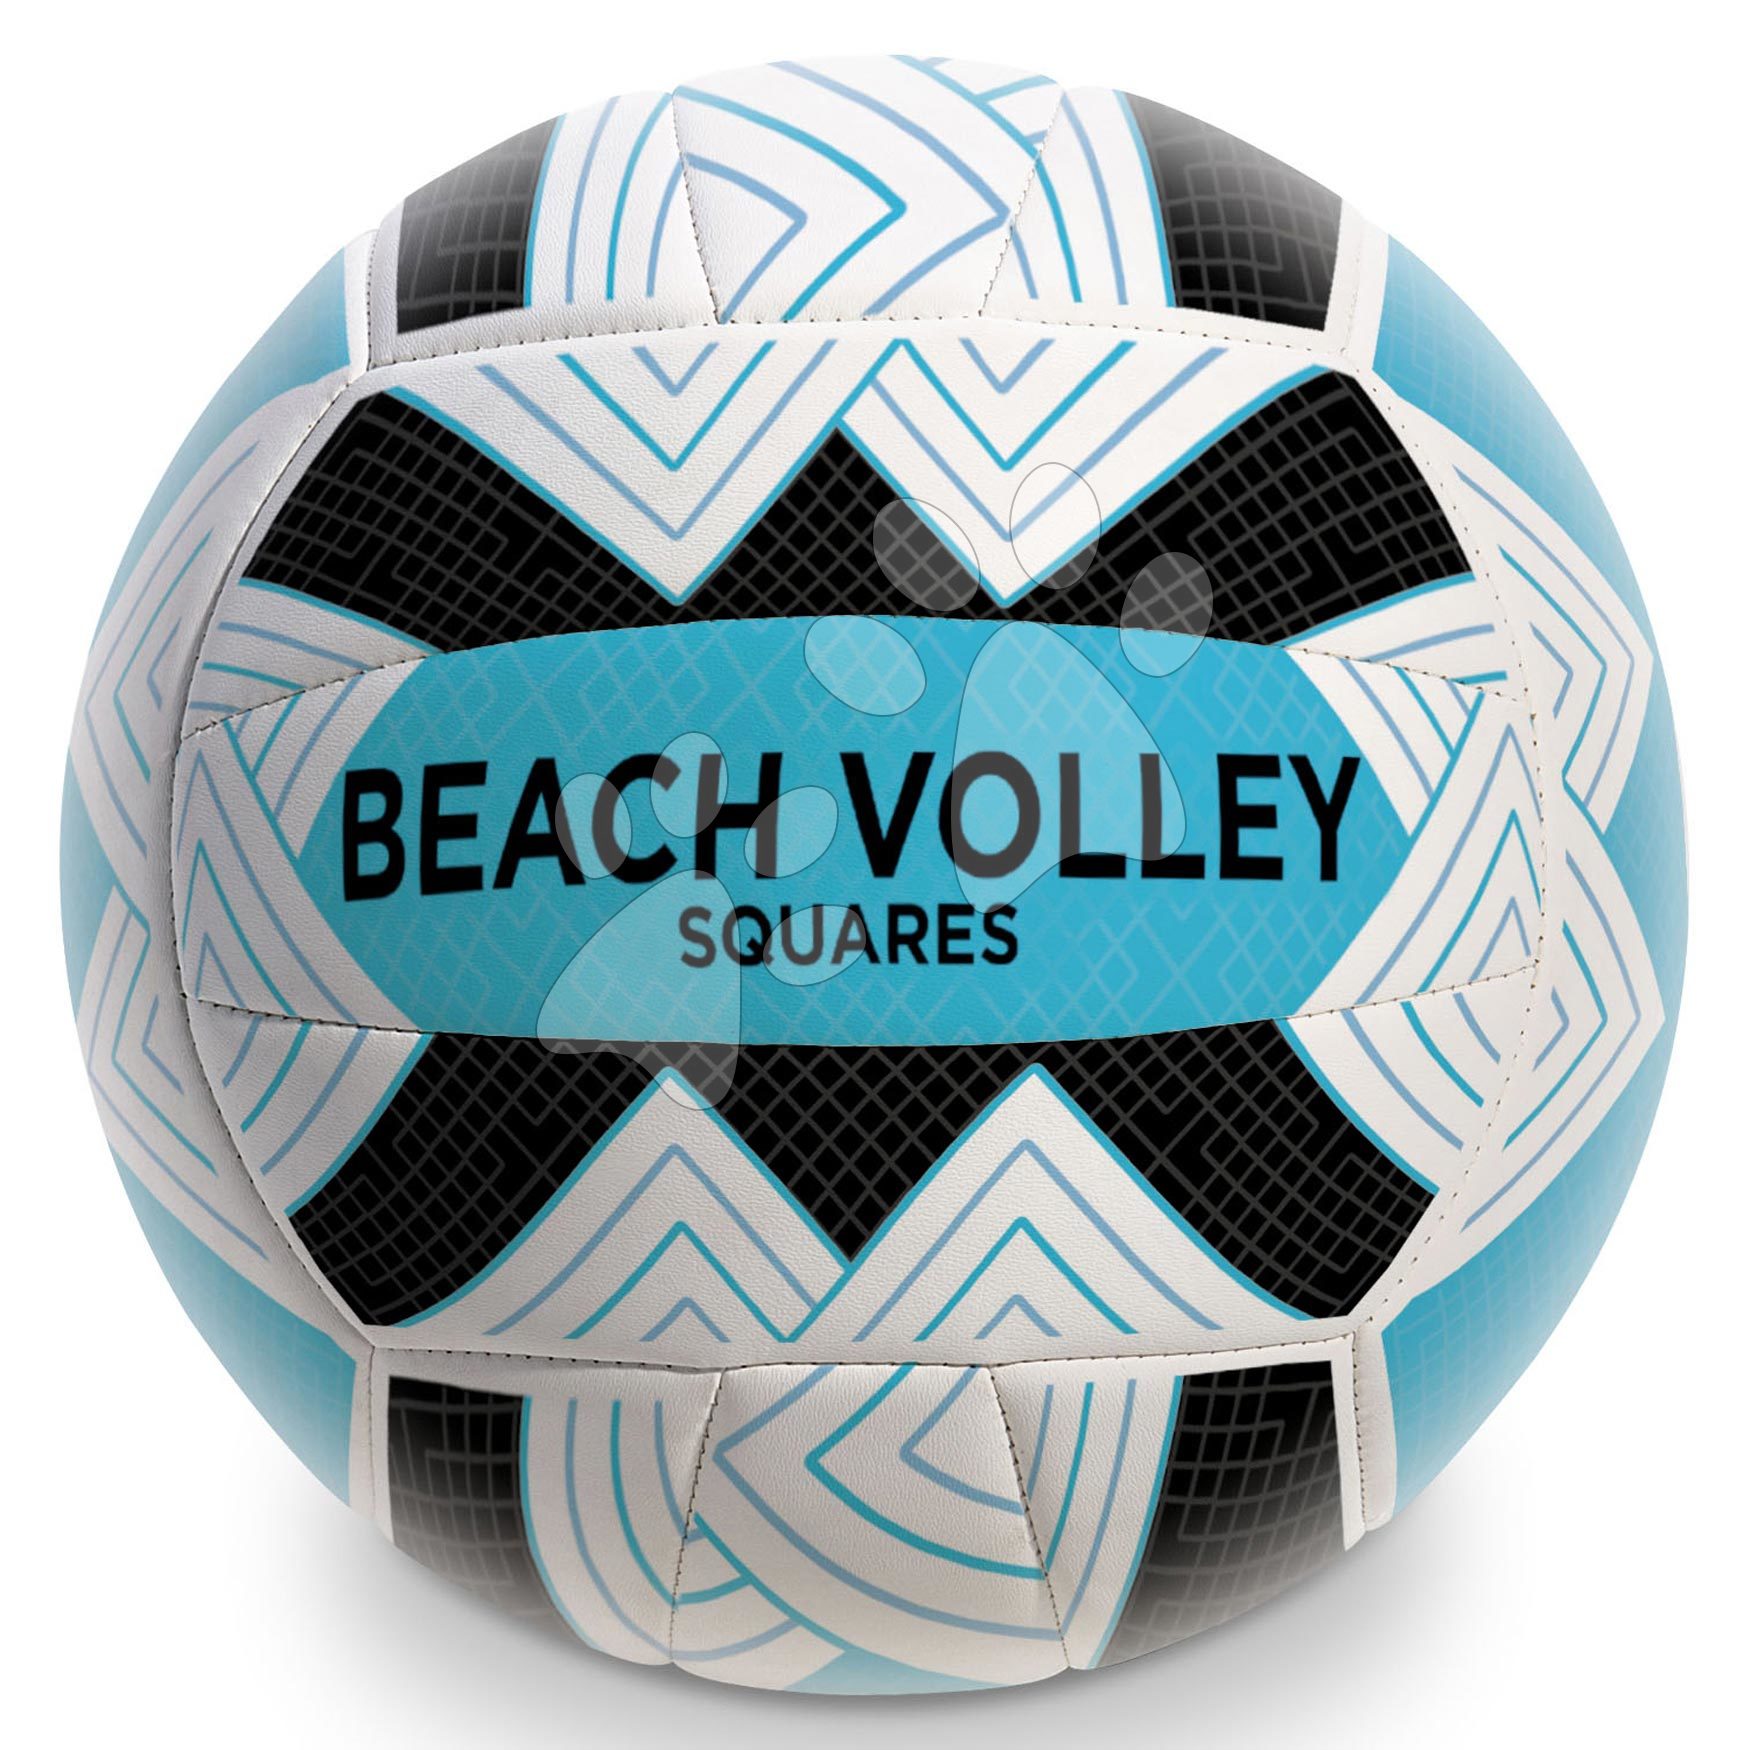 Sportovní míče - Volejbalový míč šitý Beach Volley Squares Mondo velikost 5 váha 270 g